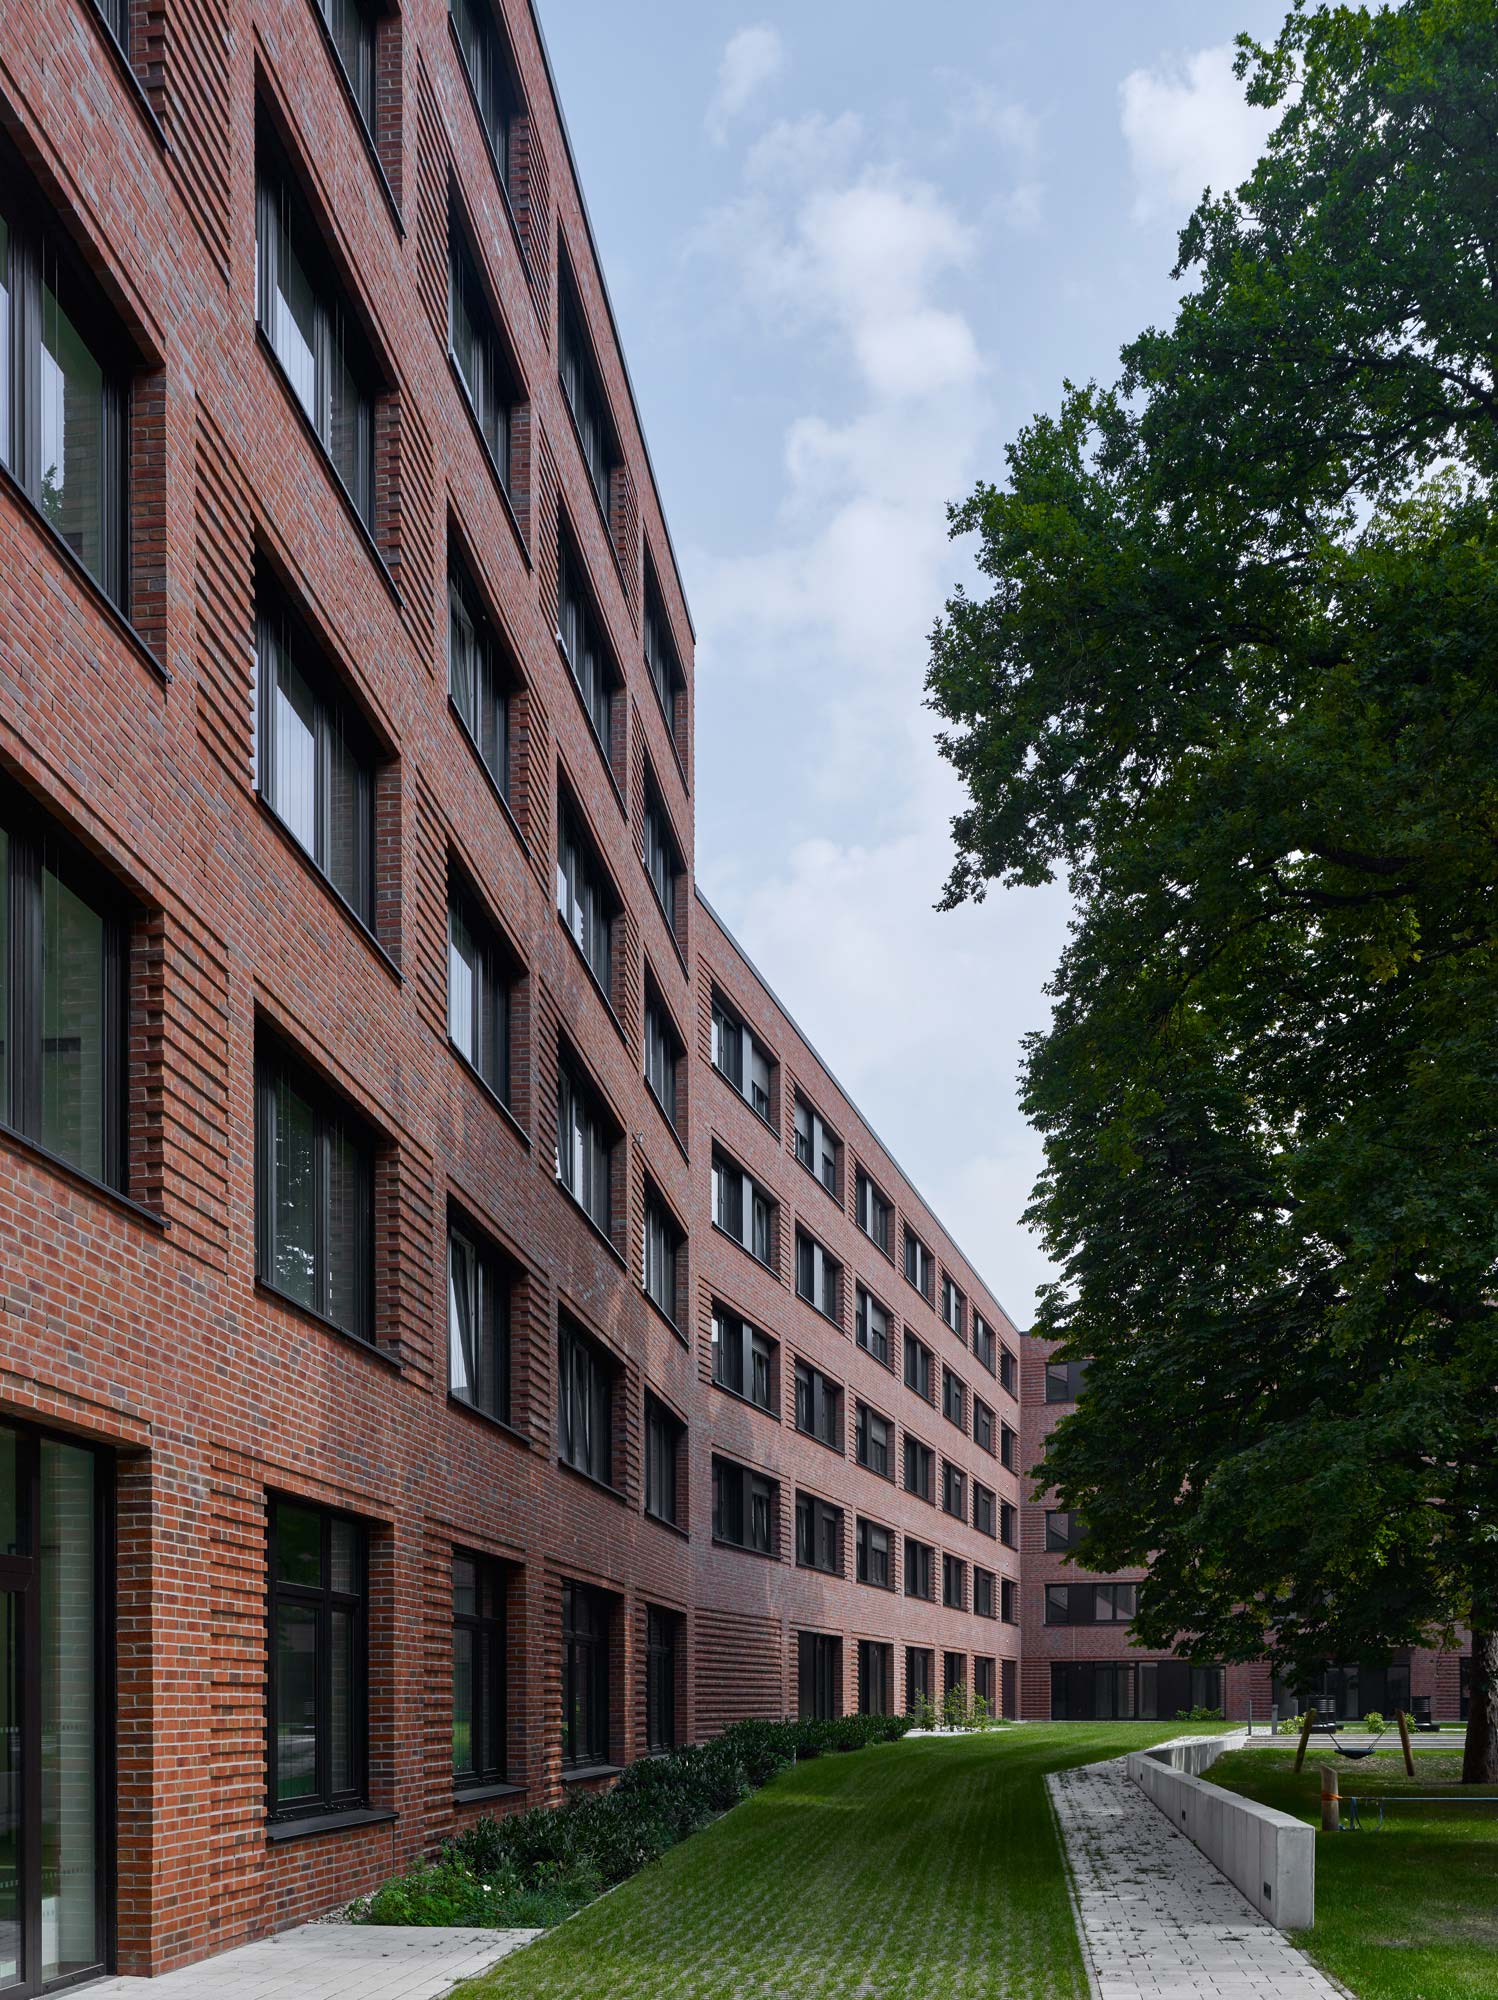 Büro- und Wohngebäude Podbielskistraße in Hannover - Innenhof - Foto: Stefan Müller